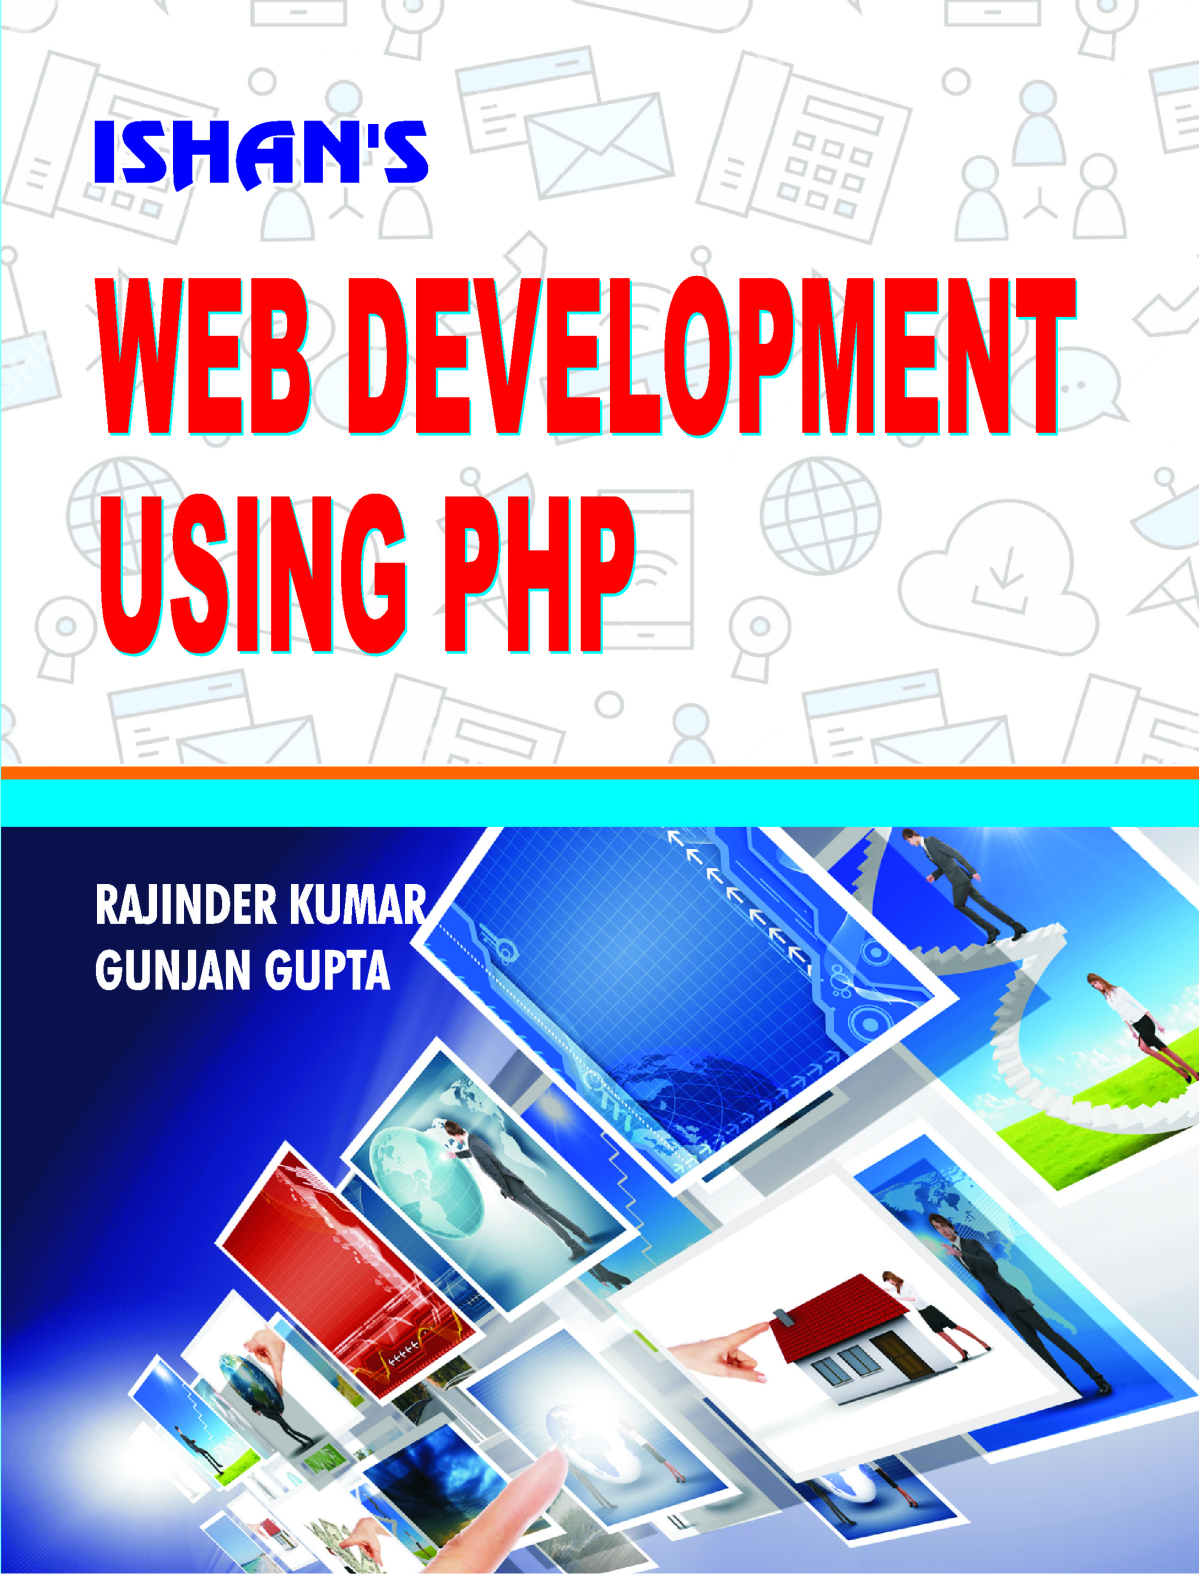 Web Development using PHP